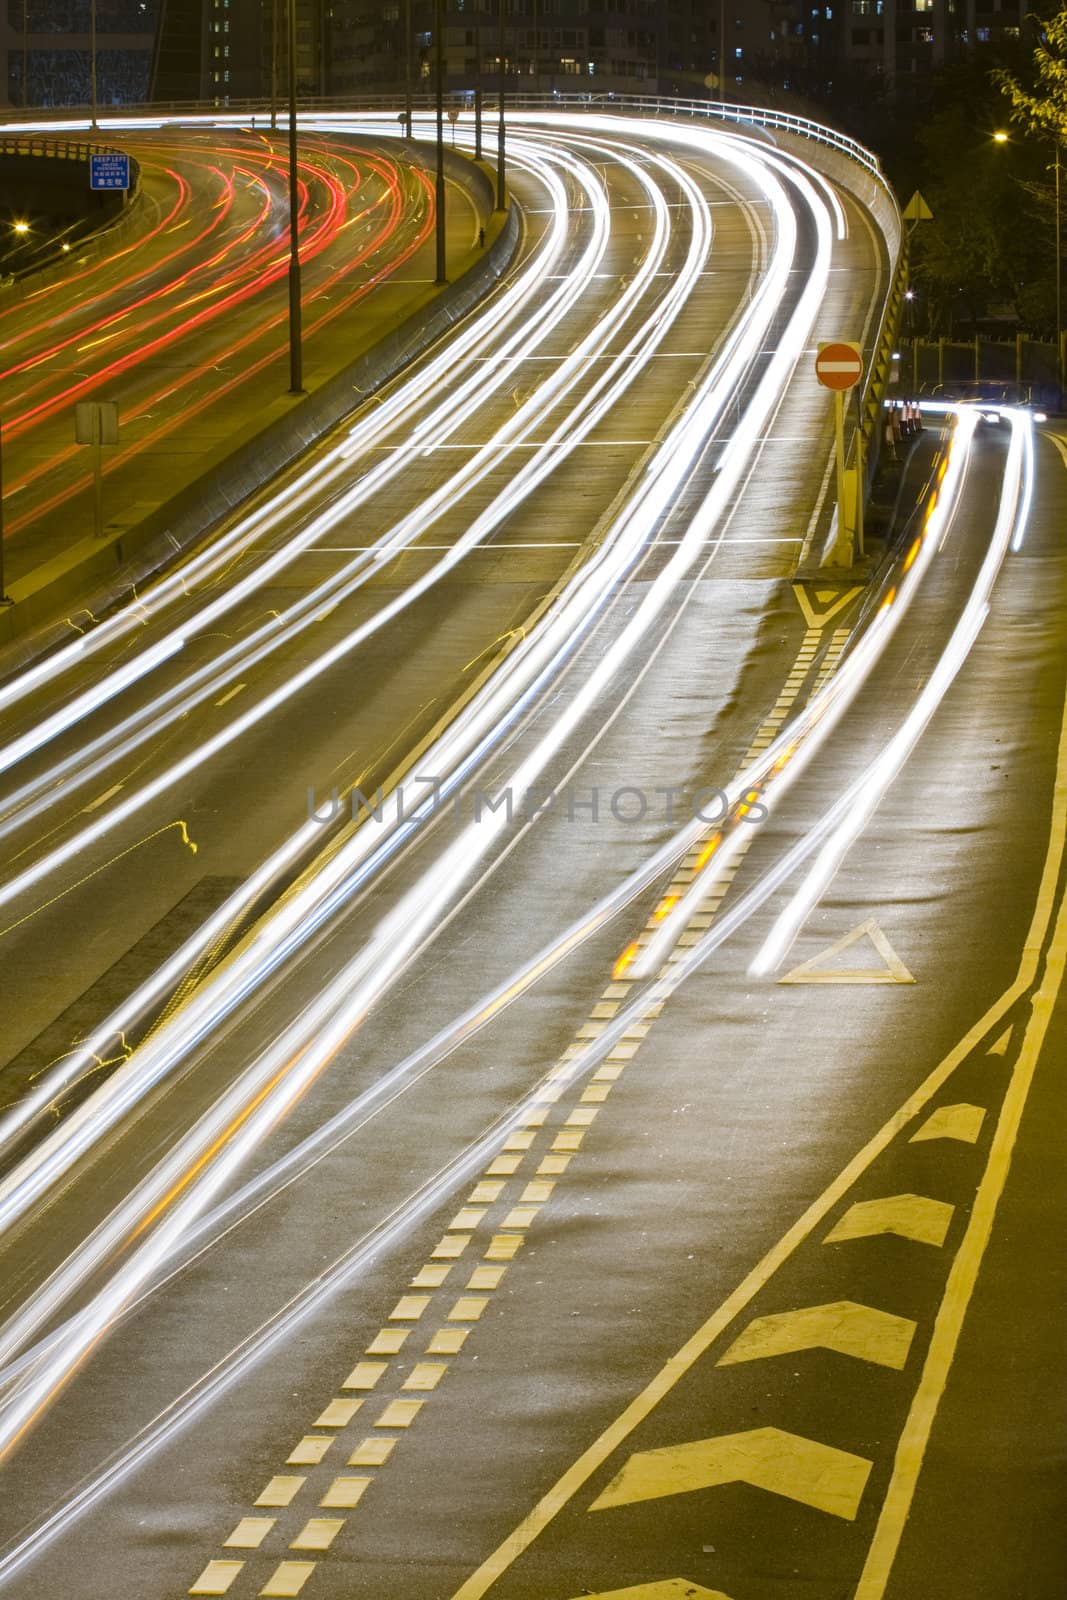 It is a shot of hong kong traffic night